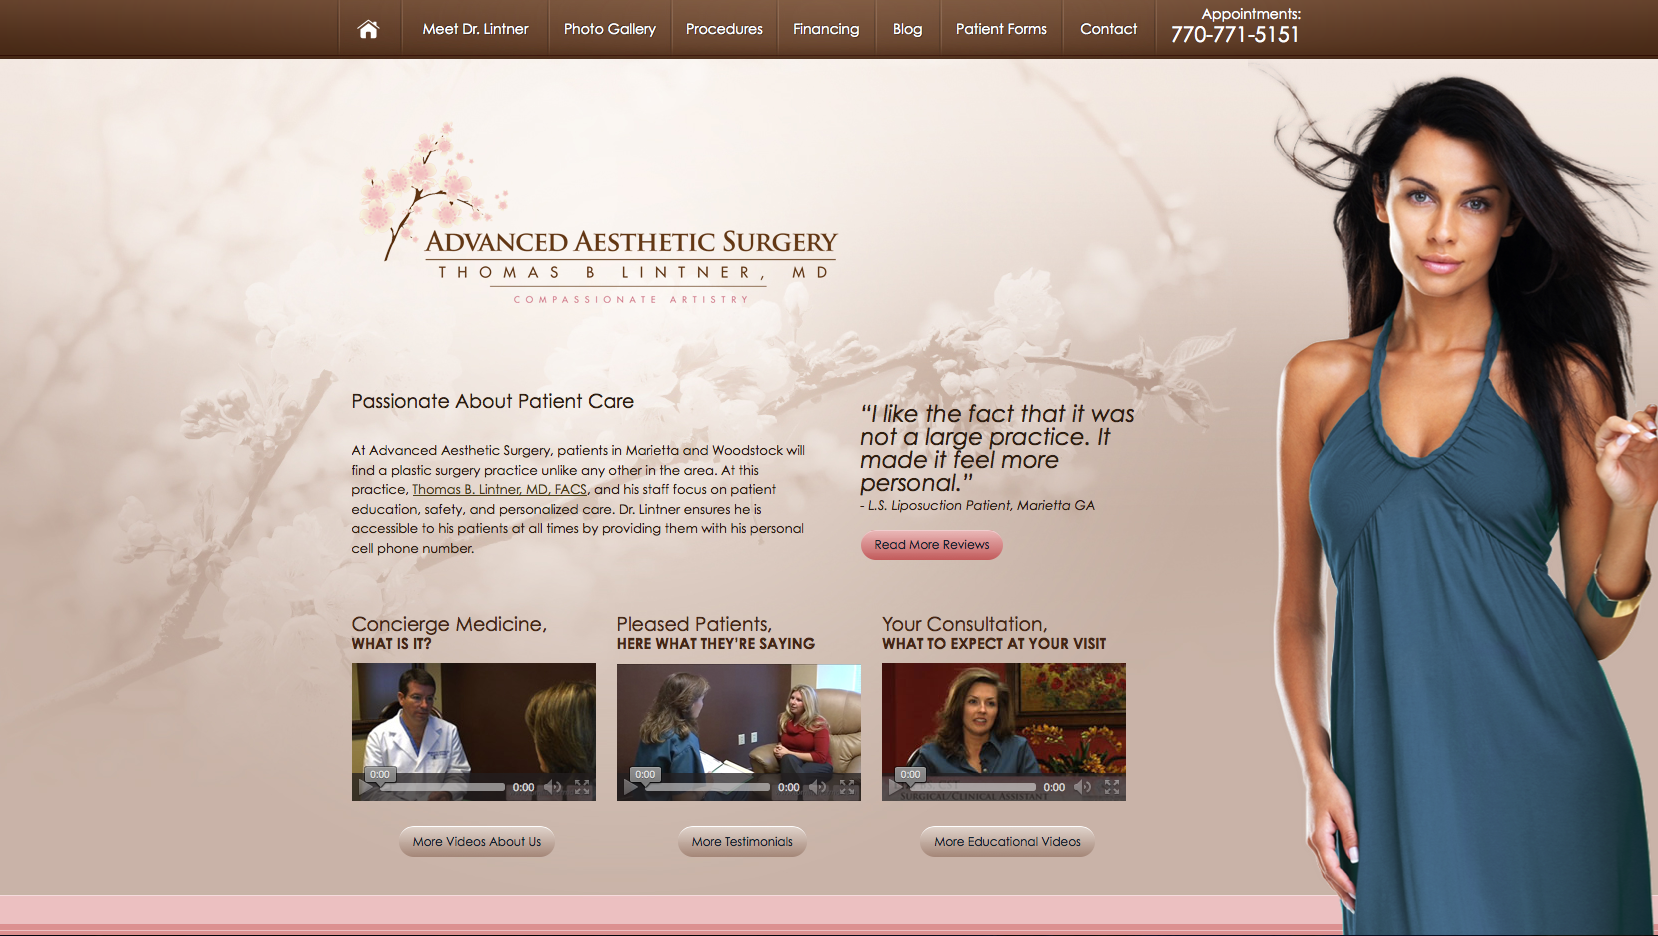 Atlanta plastic surgery, breast augmentation, plastic surgeon, medical website design, Dr. Thomas Lintner